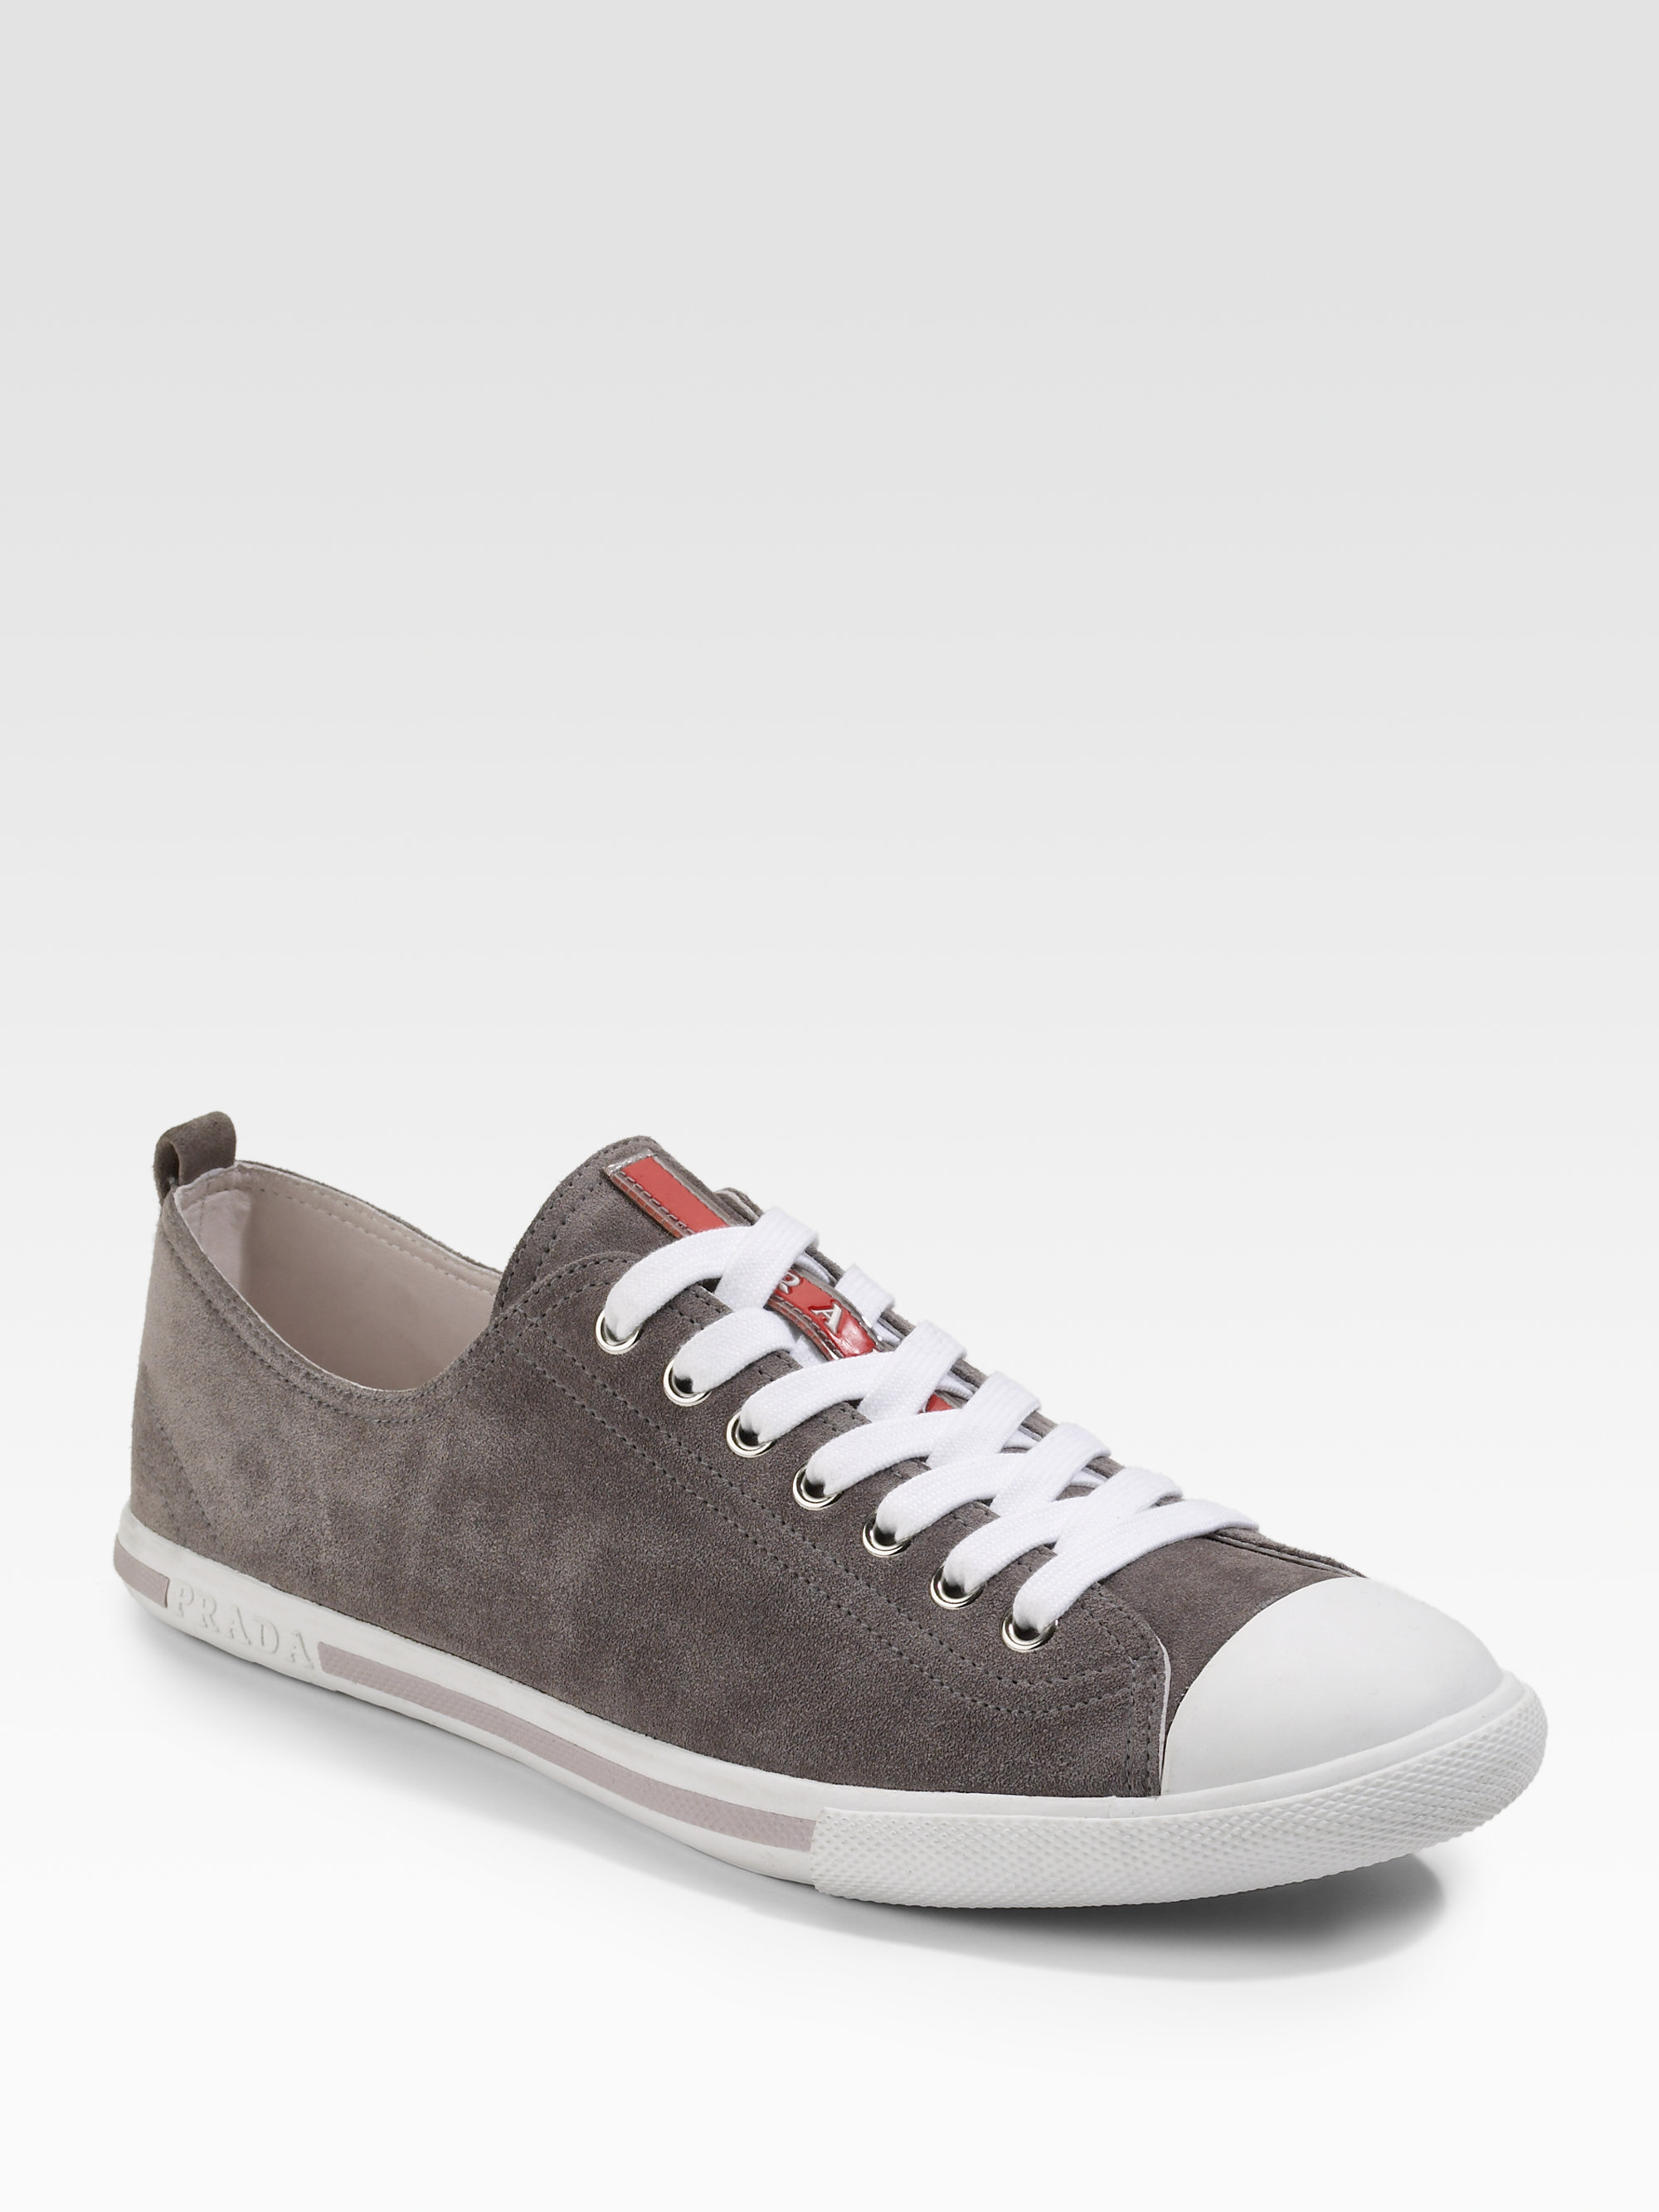 Prada Suede Sneakers in Gray for Men | Lyst